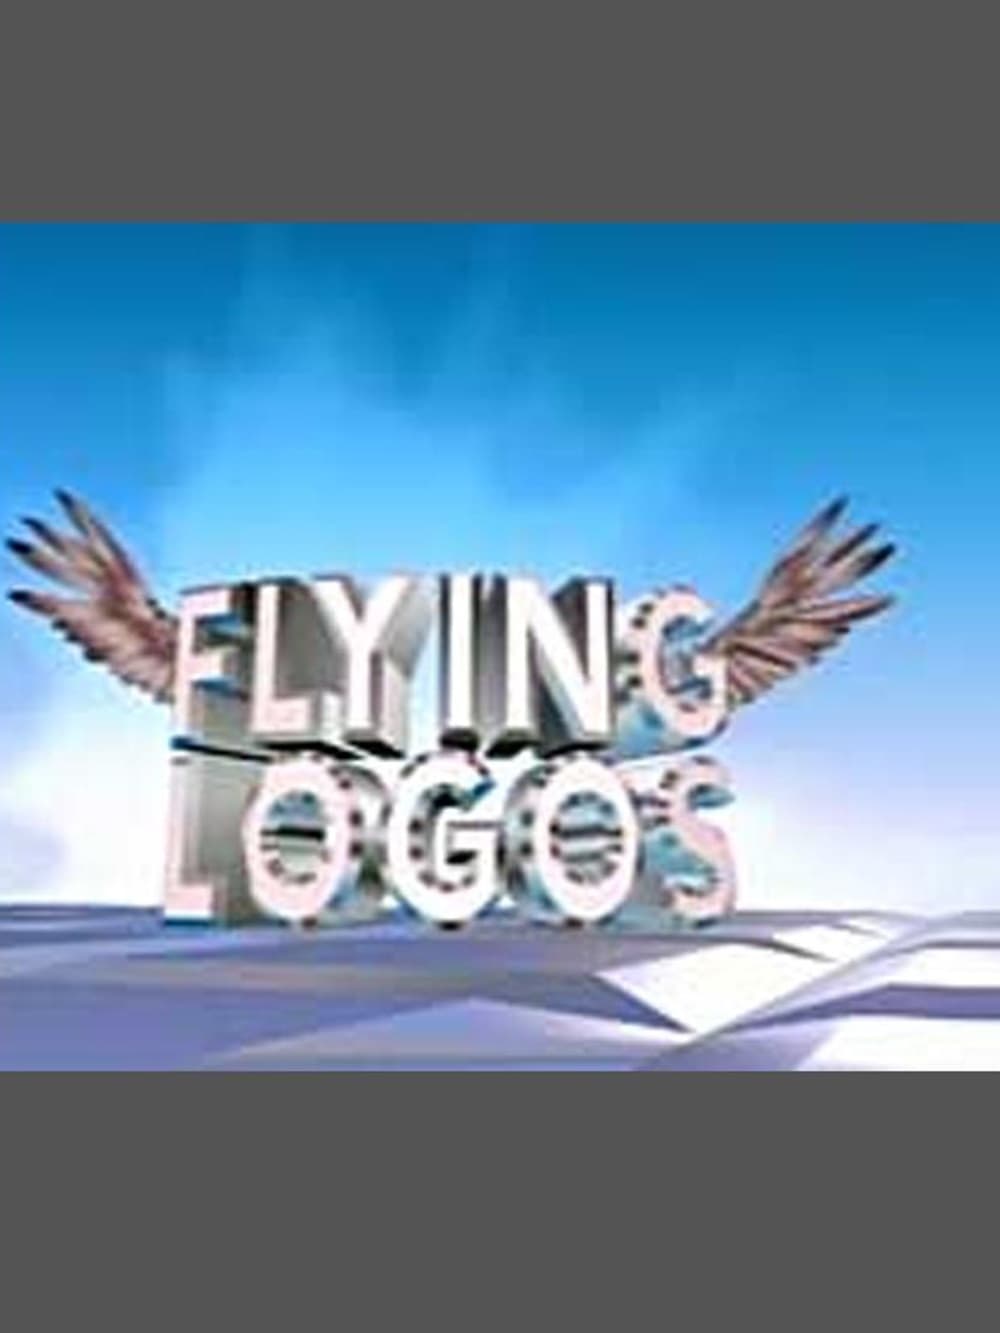 Flying Logos